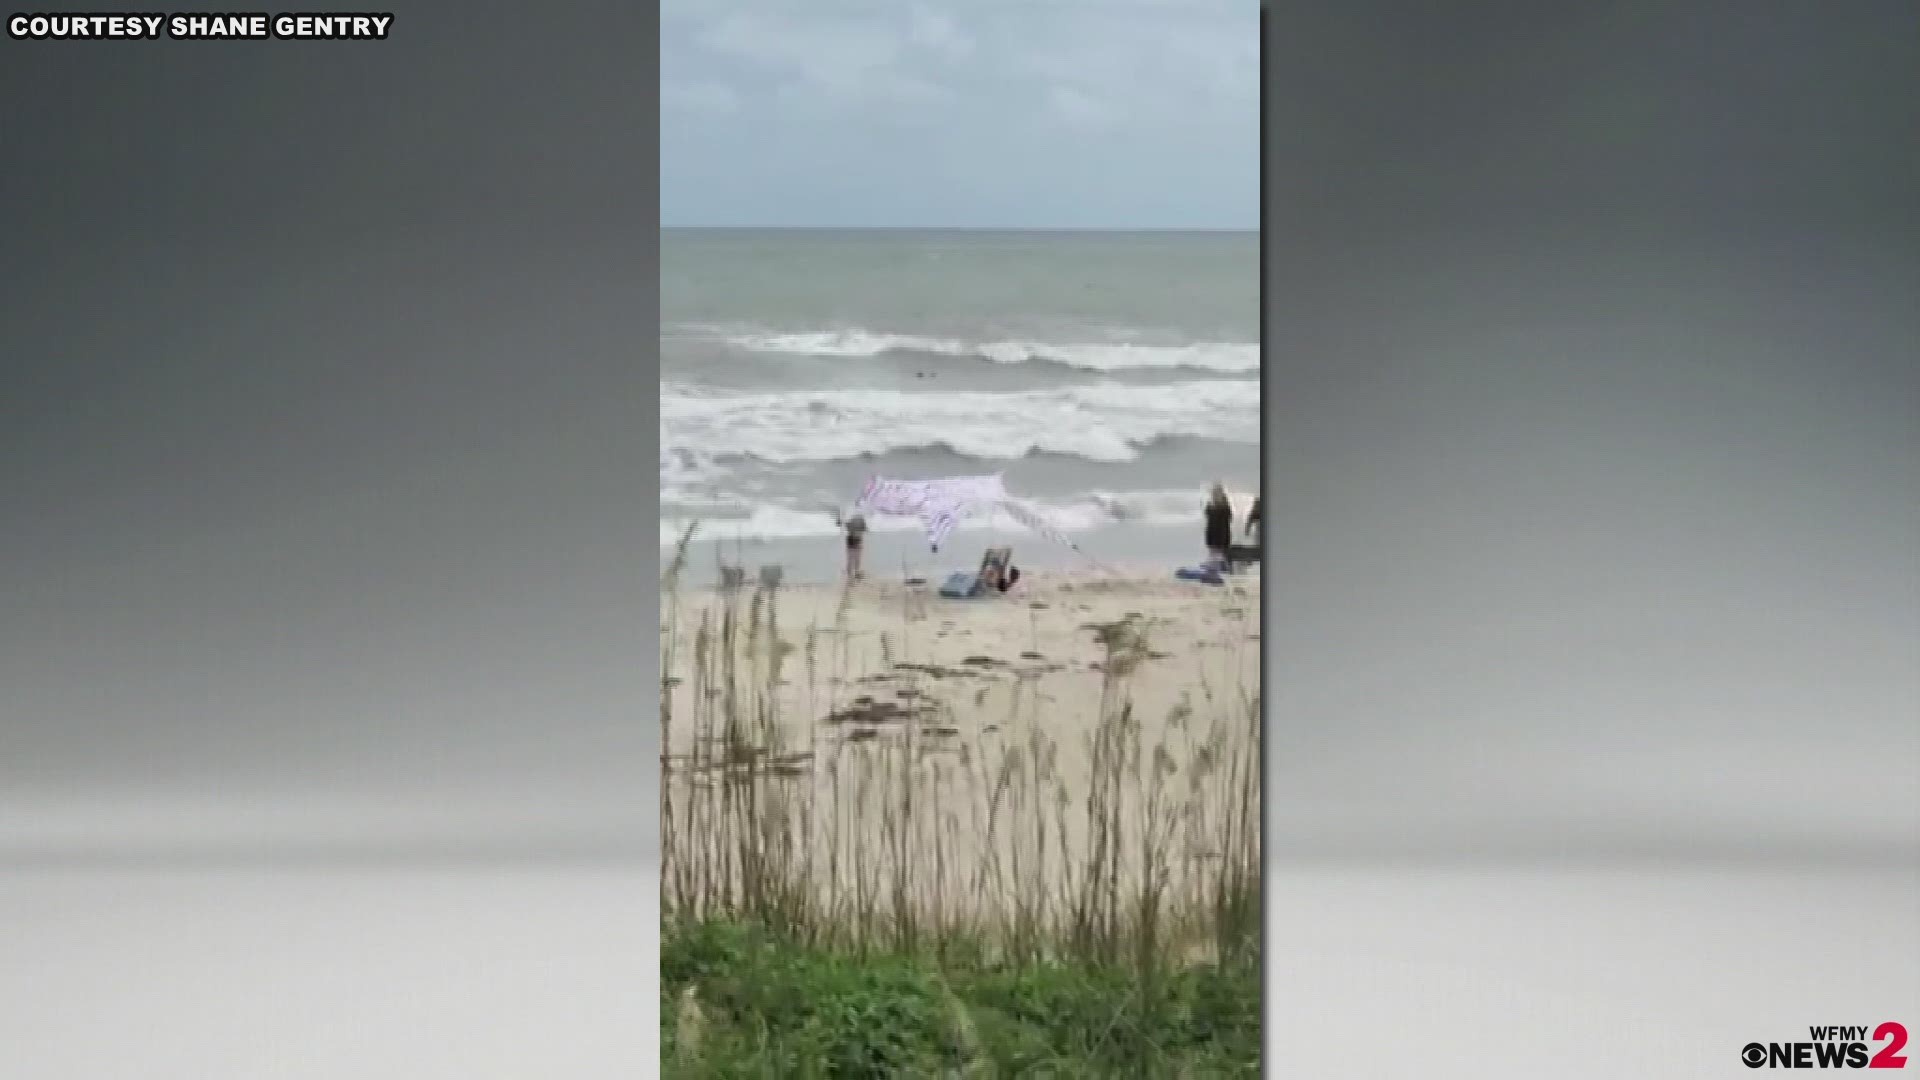 Emerald Isle Beachgoers Make Human Chain After Drowning